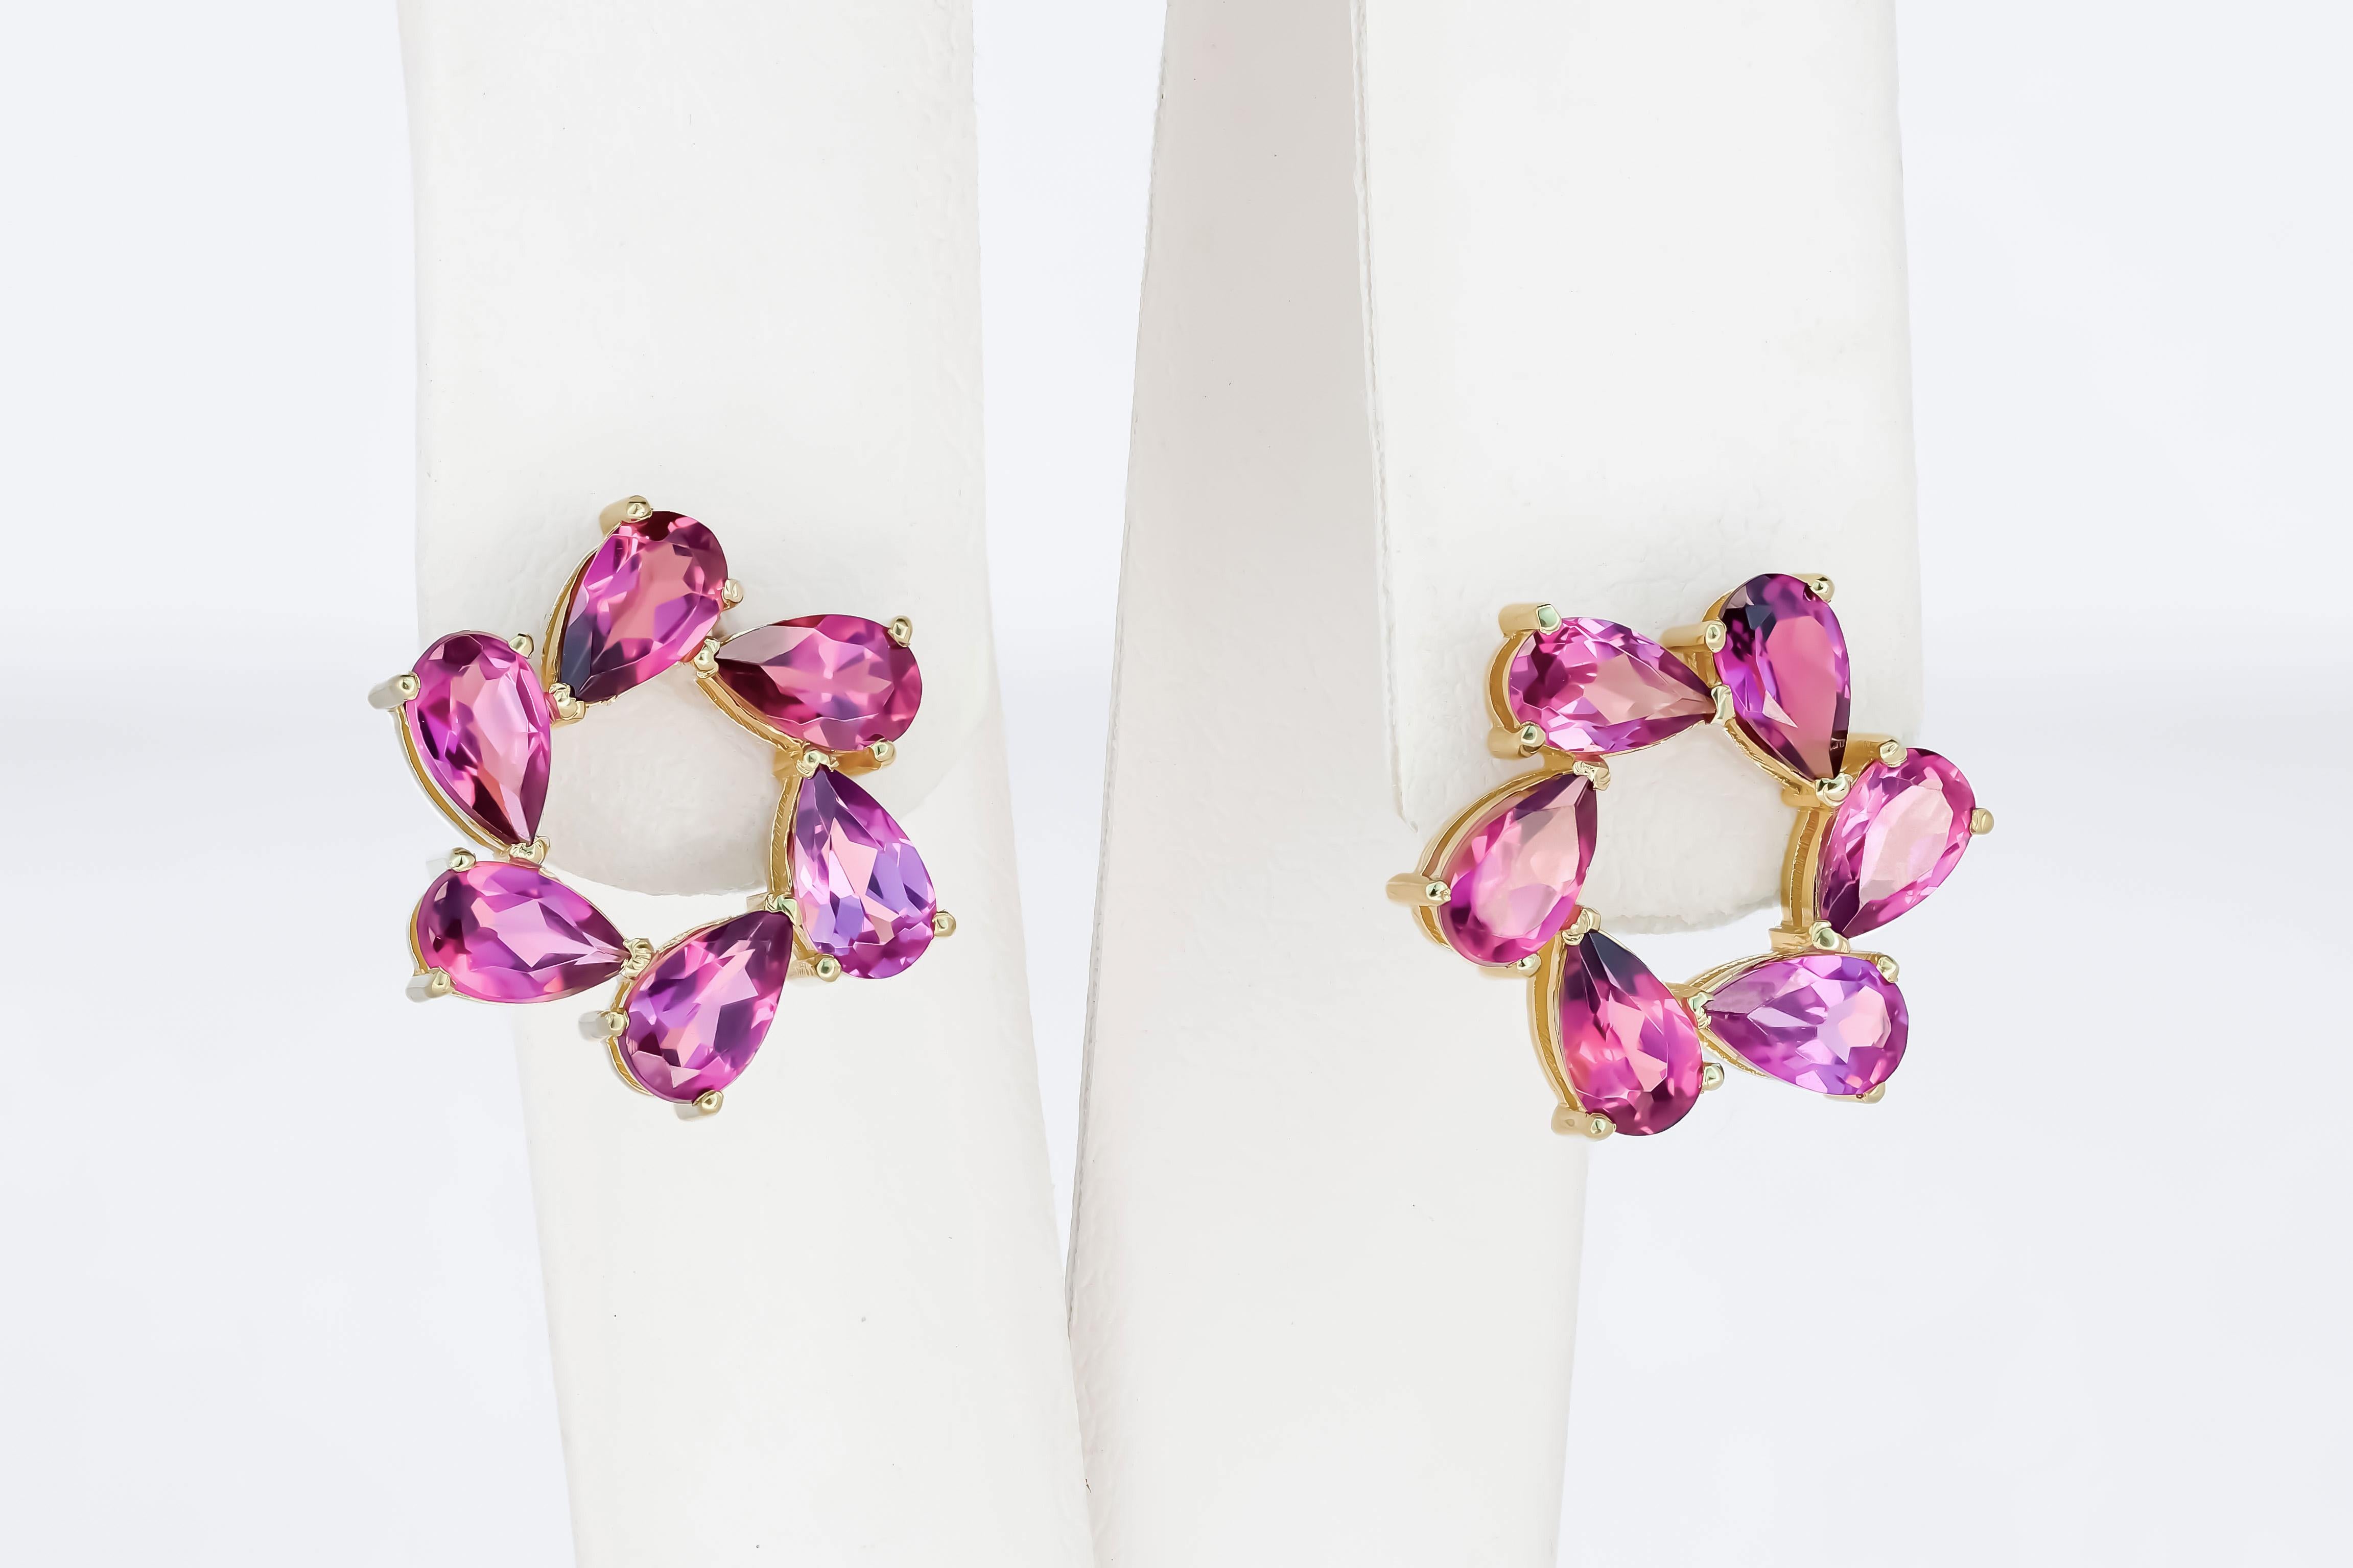 Modern 14k gold earrings studs with garnets